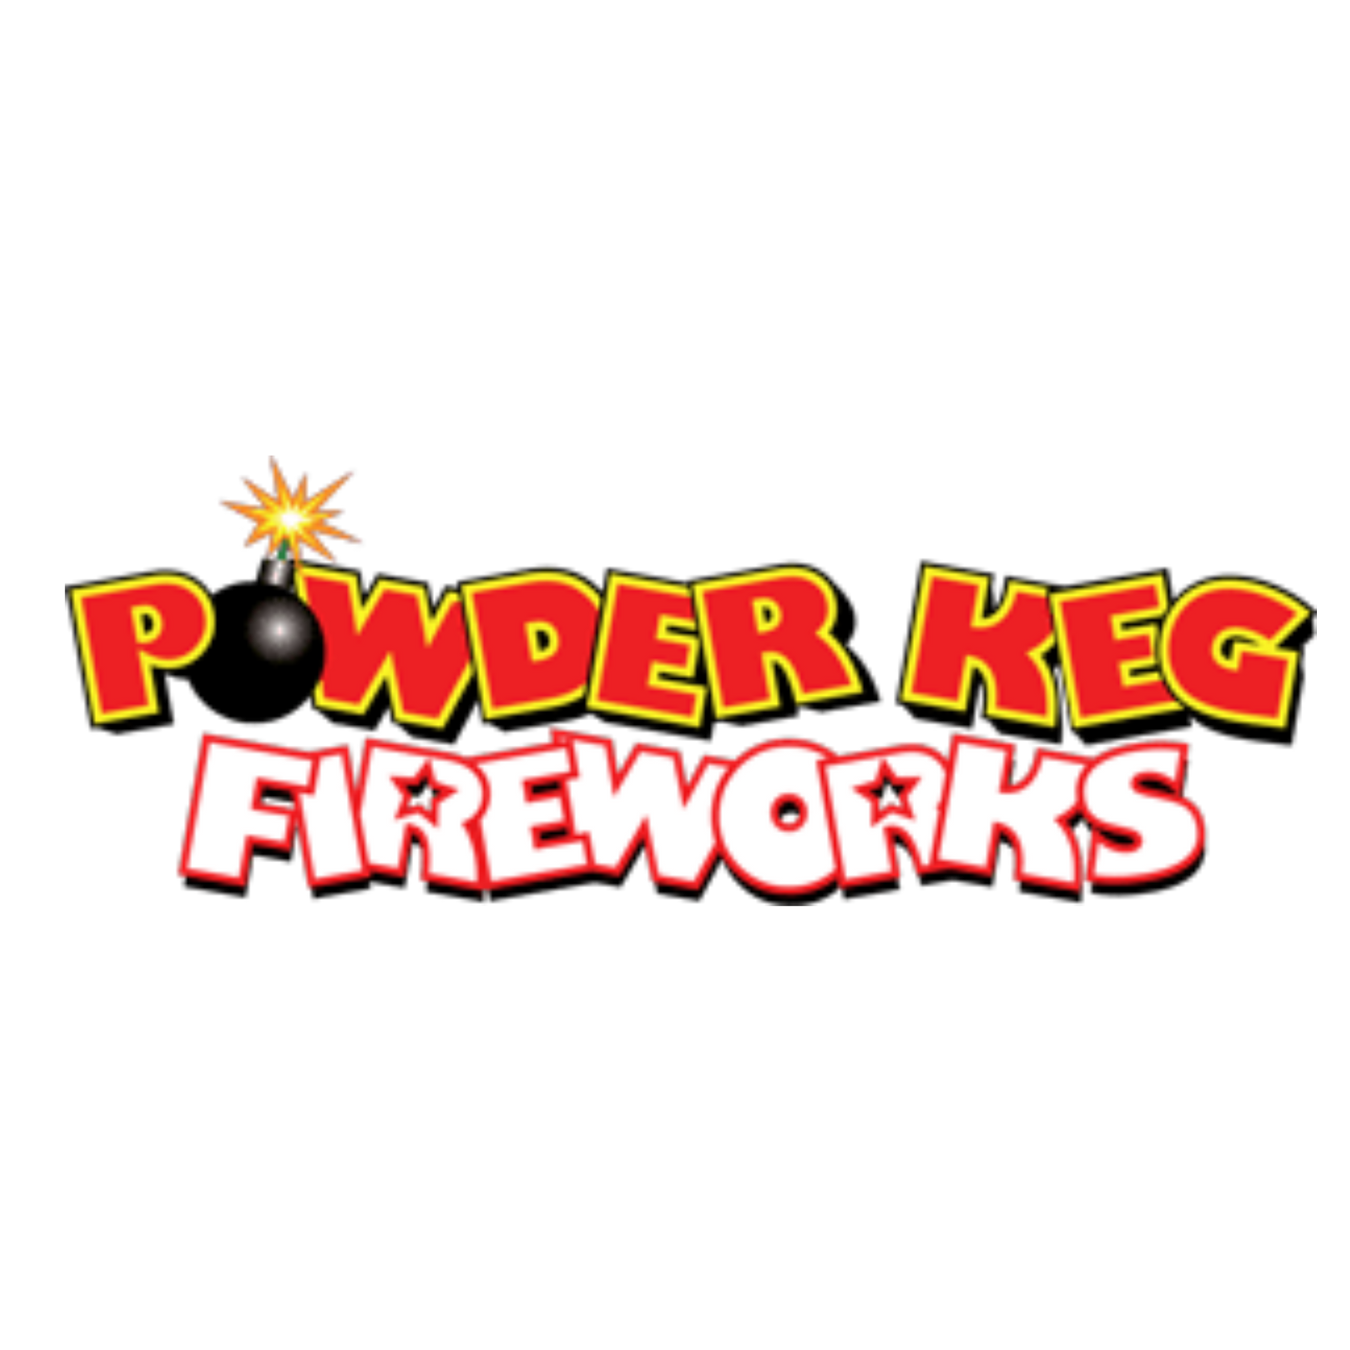 Powderkeg Fireworks